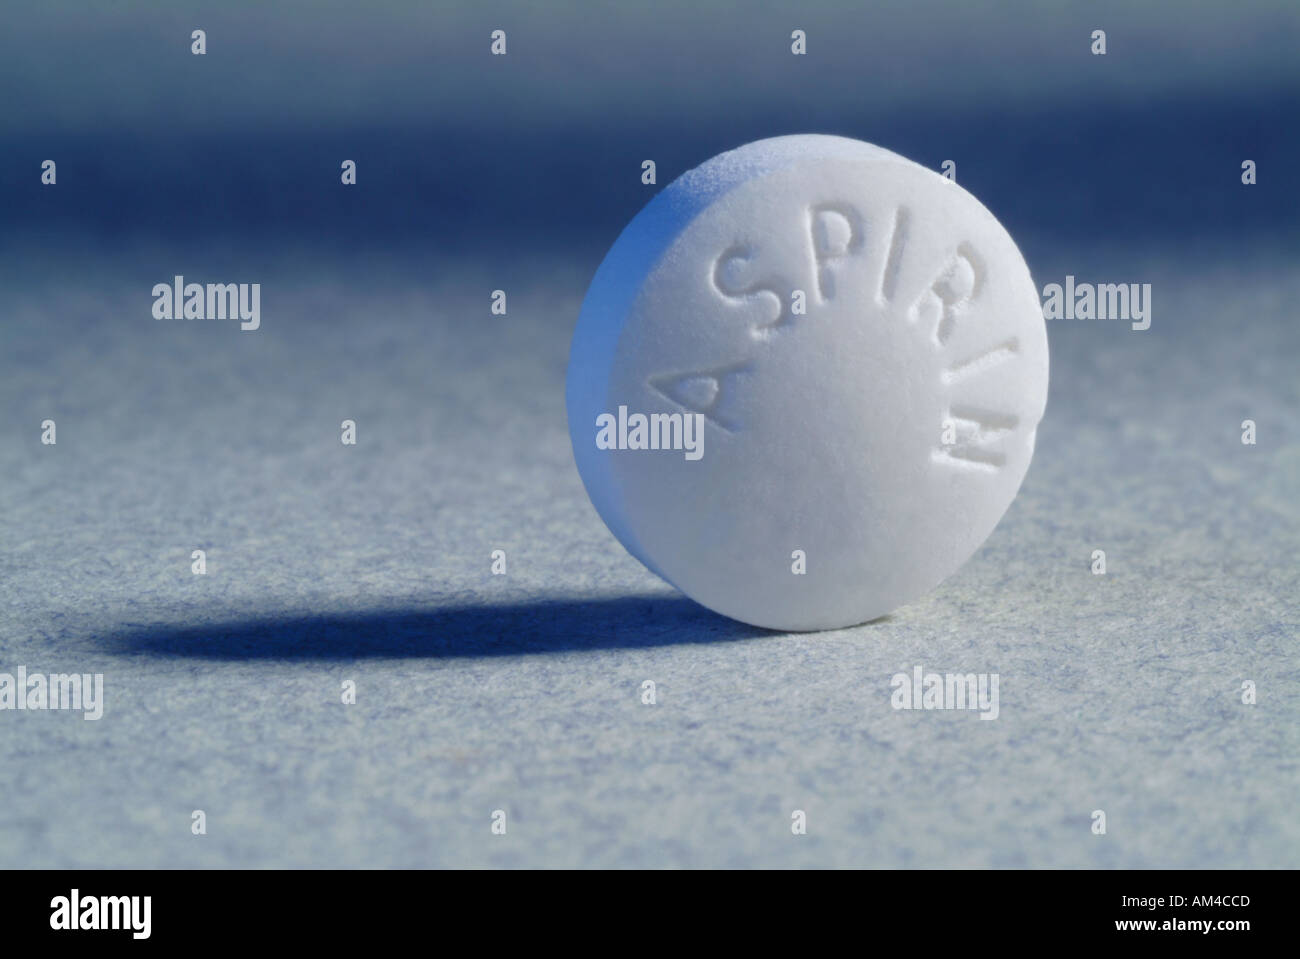 Aspirin-Tablette hautnah Stockfoto